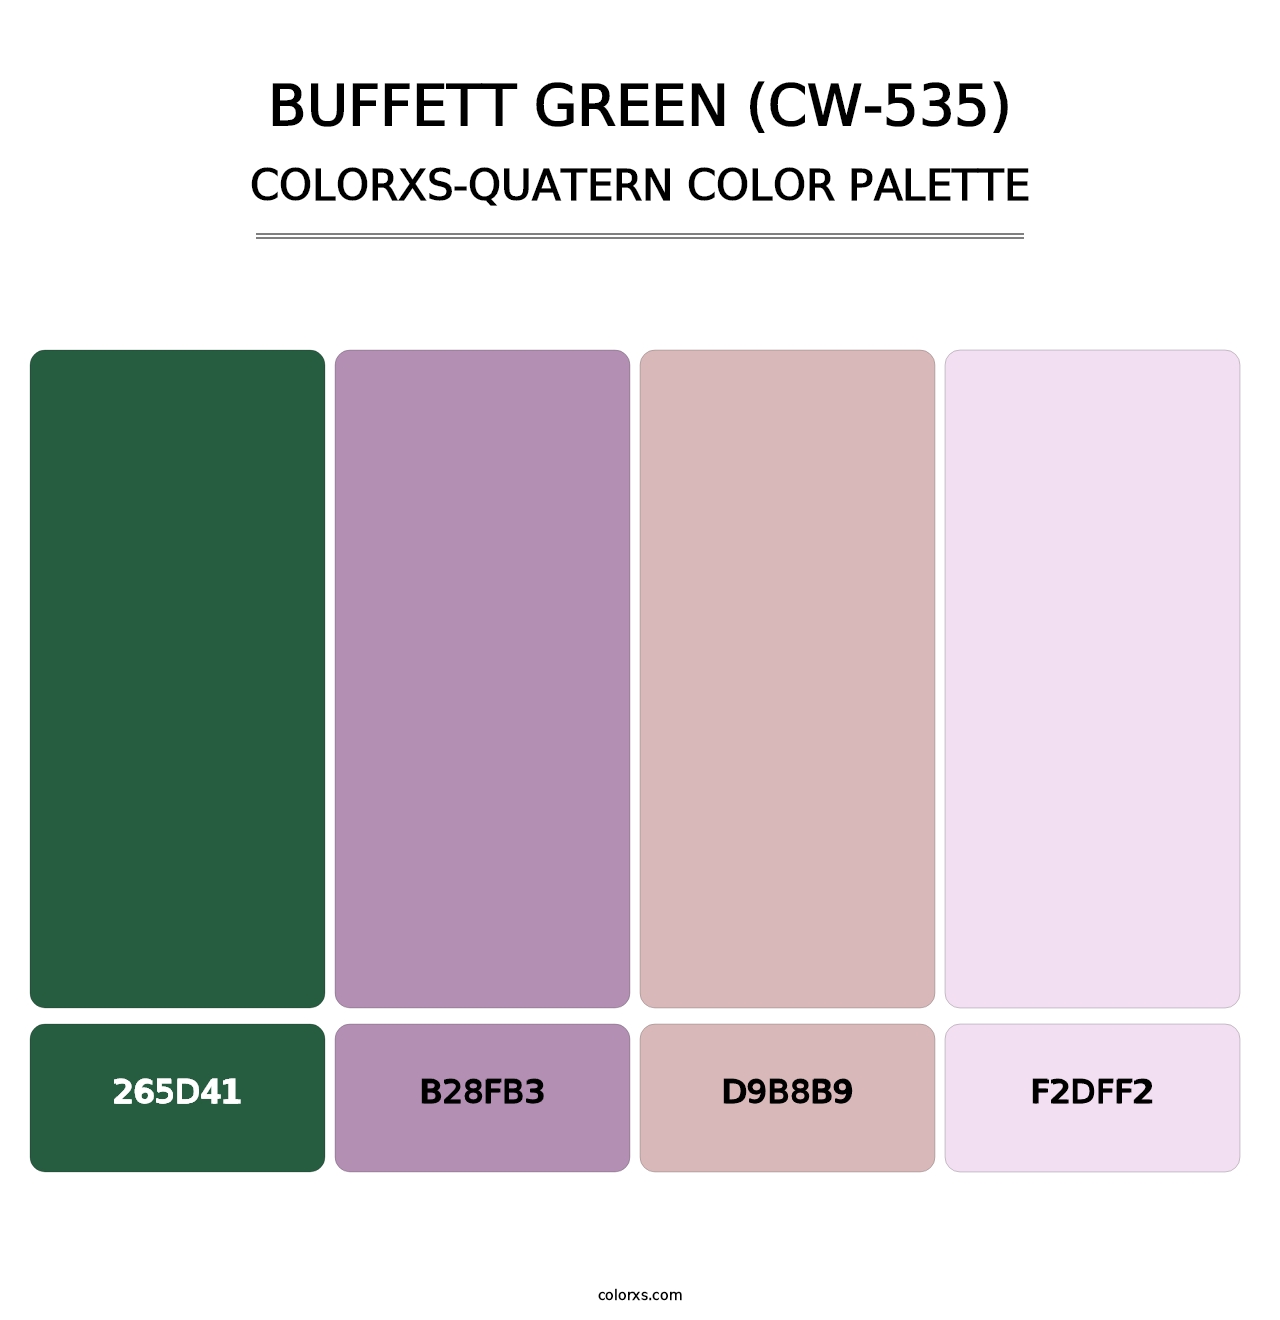 Buffett Green (CW-535) - Colorxs Quatern Palette